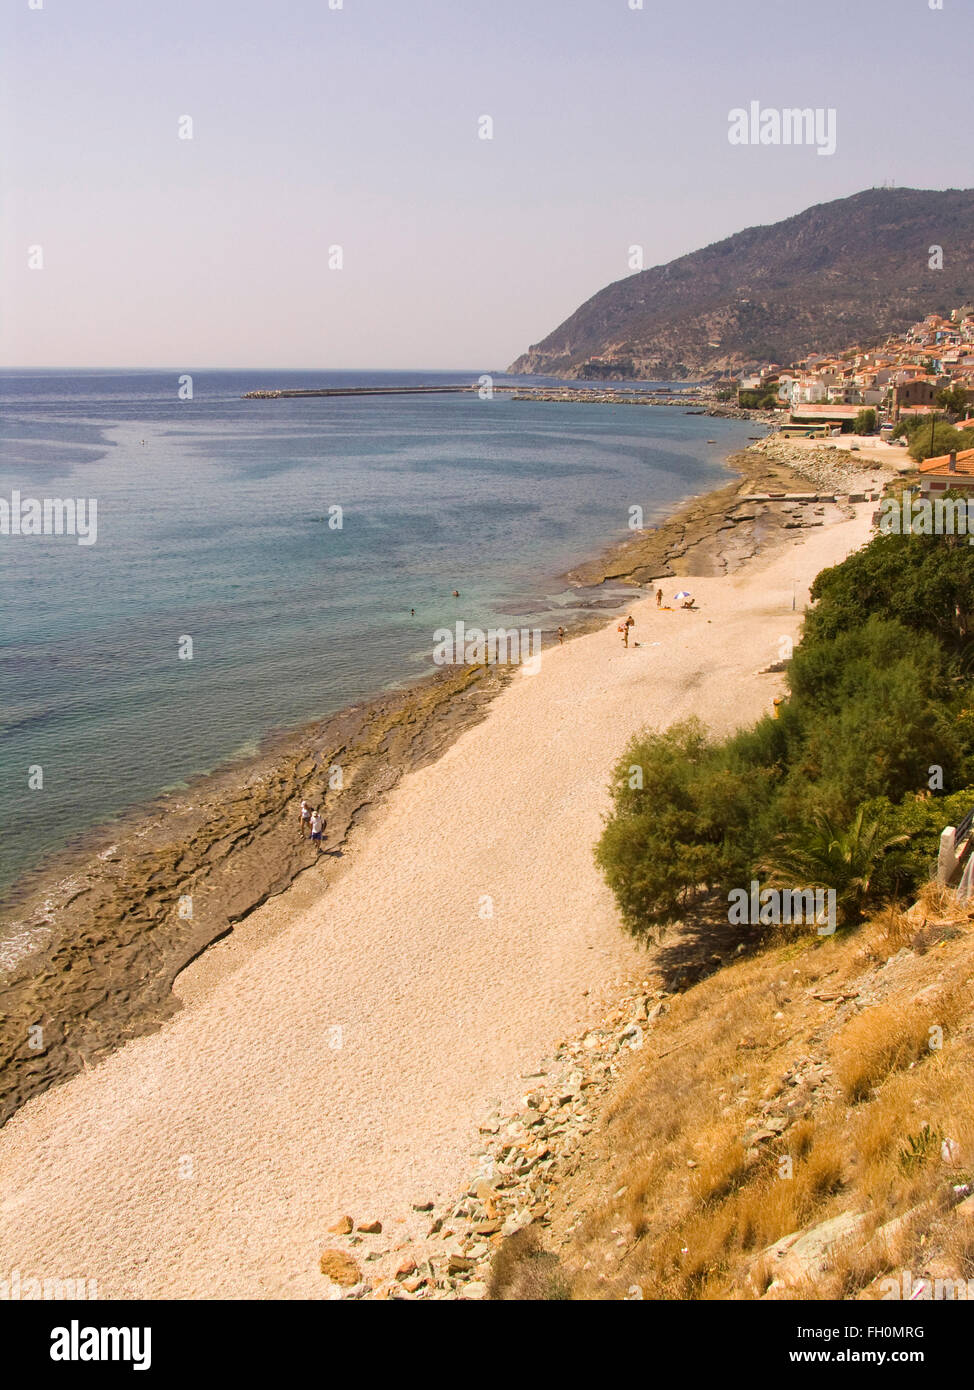 plomari, lesbos island, north west aegean, greece, europe Stock Photo